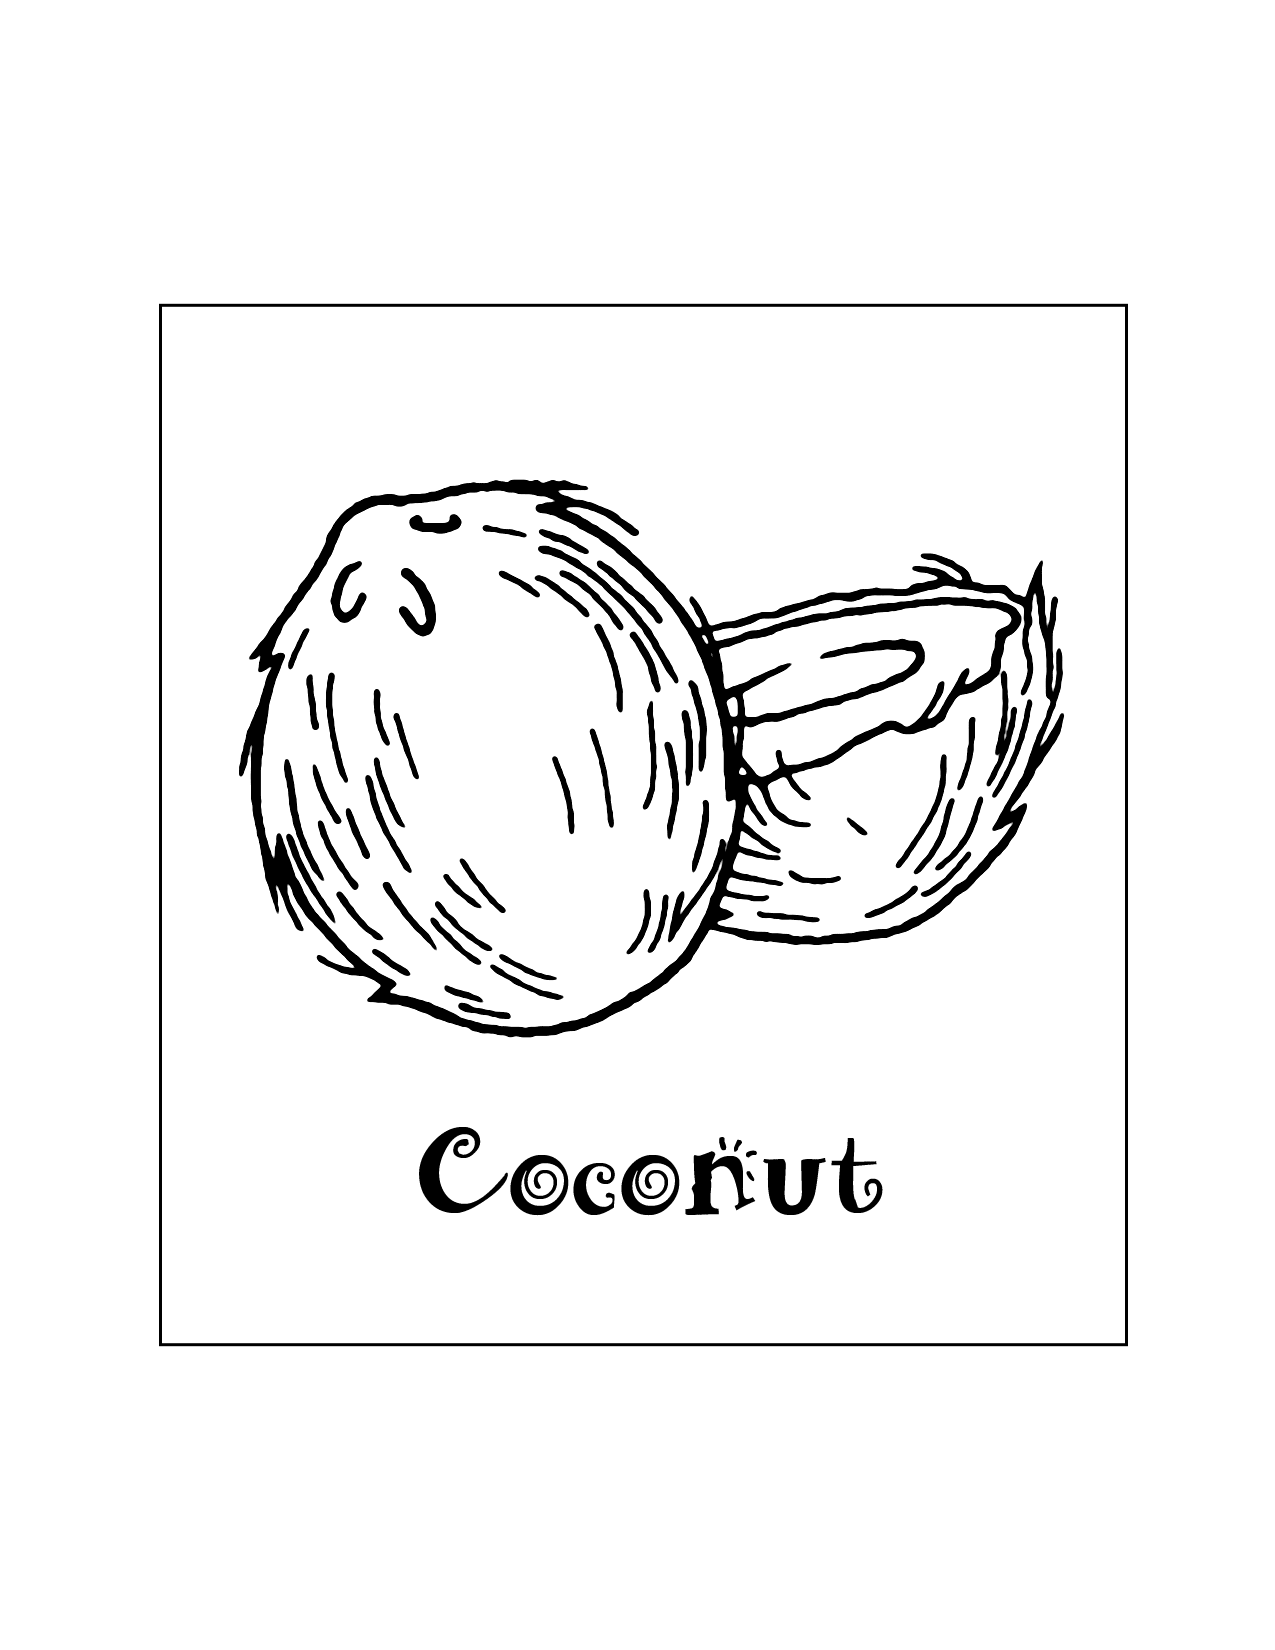 Coconut Coloring Page